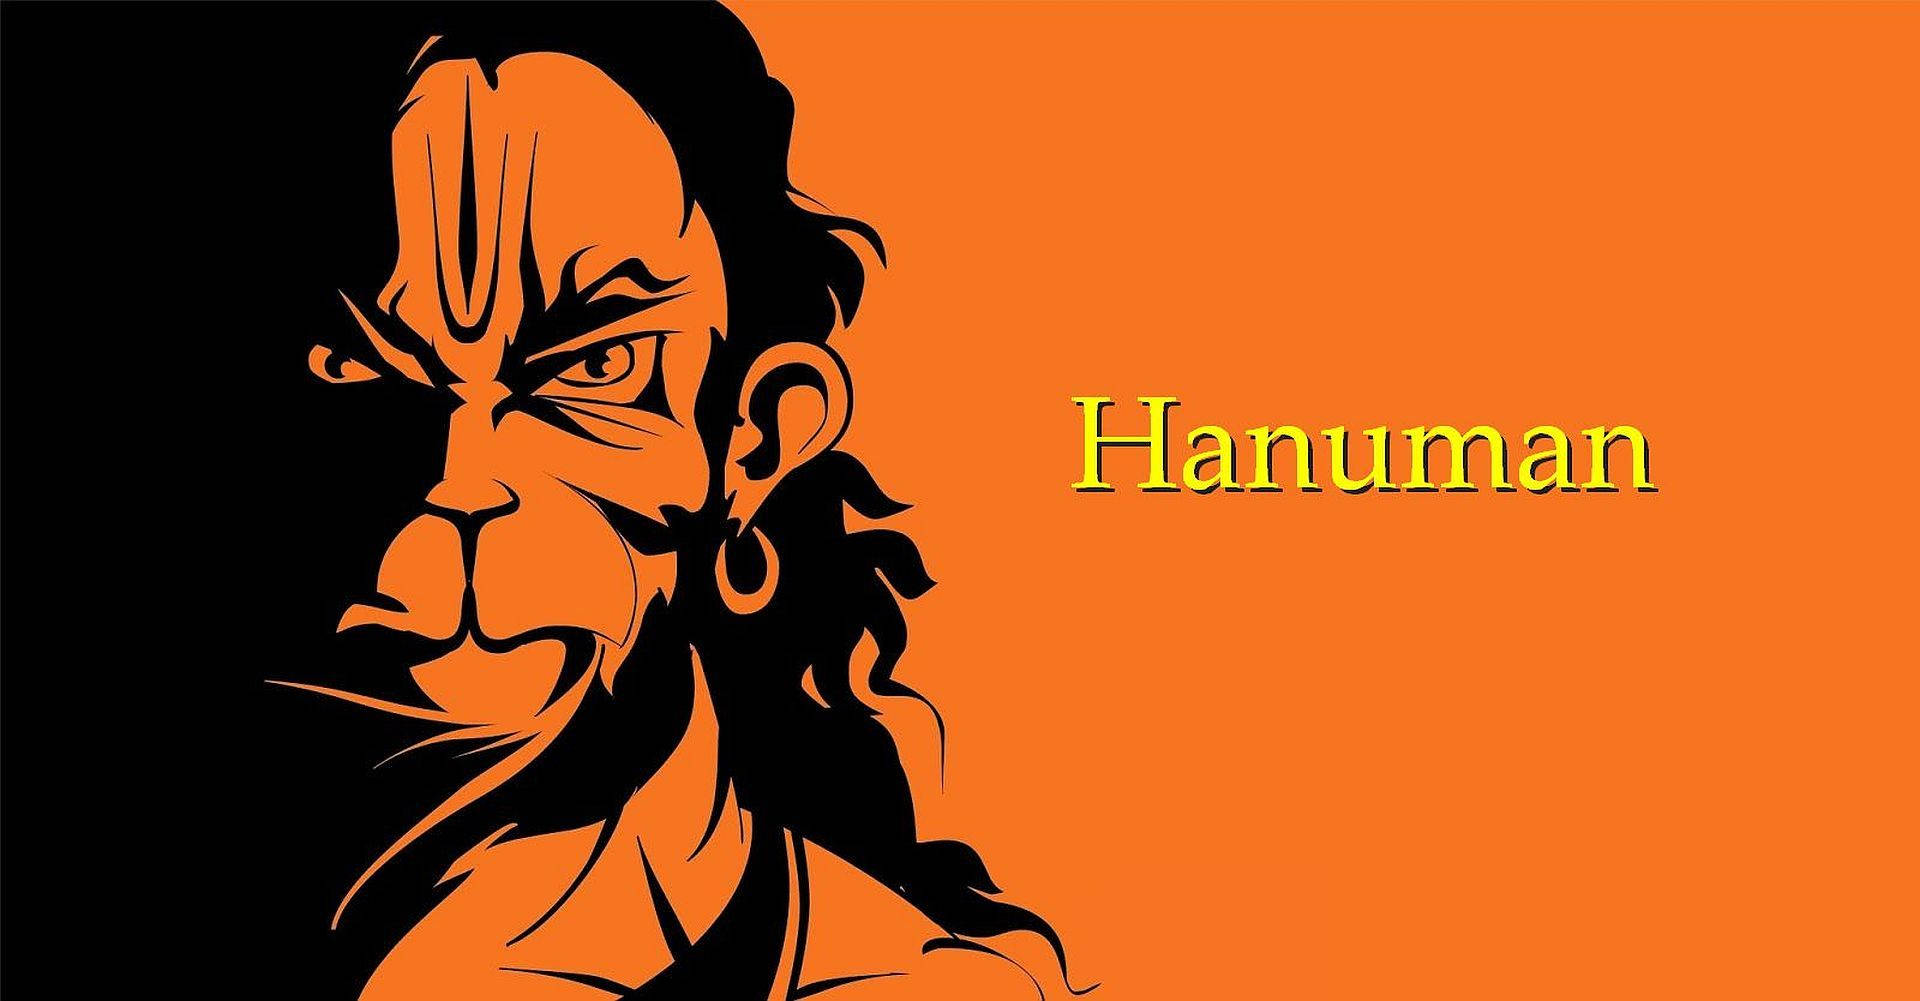 Angry Hanuman Face Graphic Art